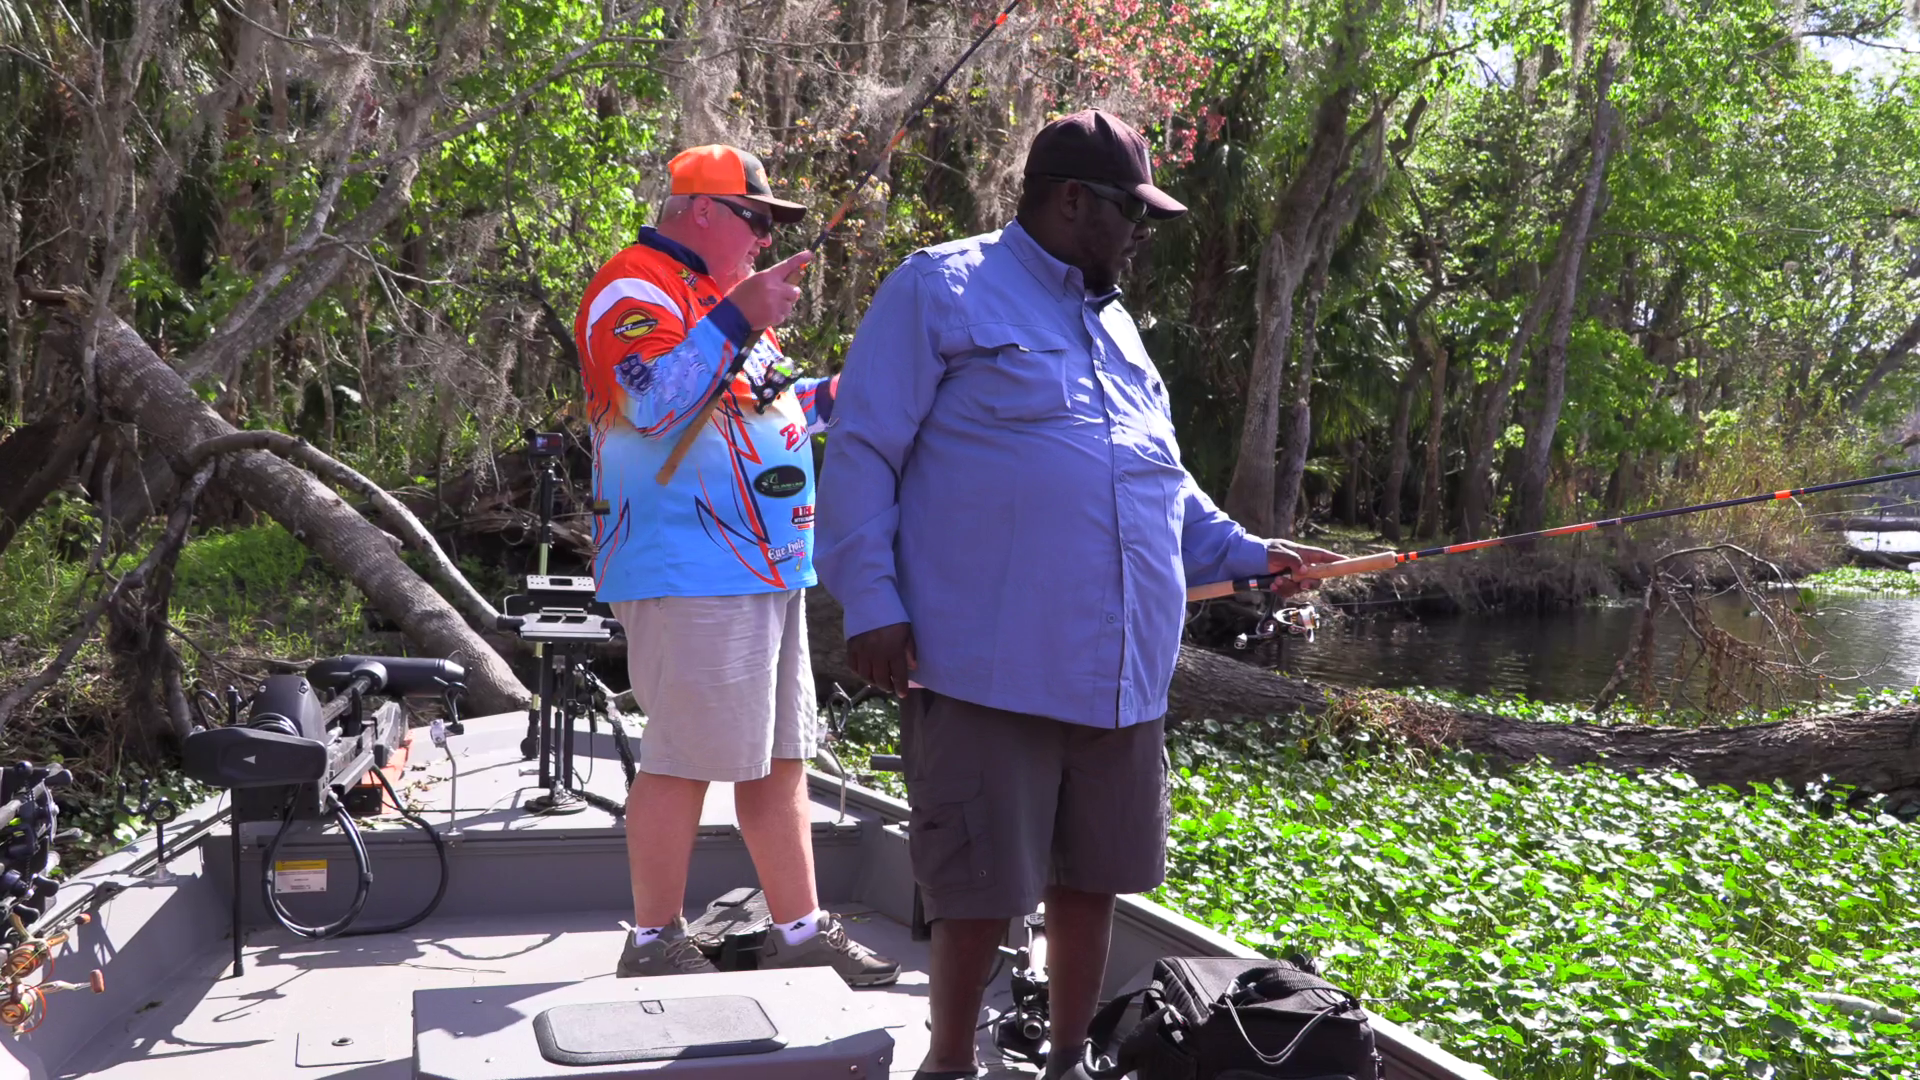 Lake Beresford, FL with Gary Burks – S09 E12